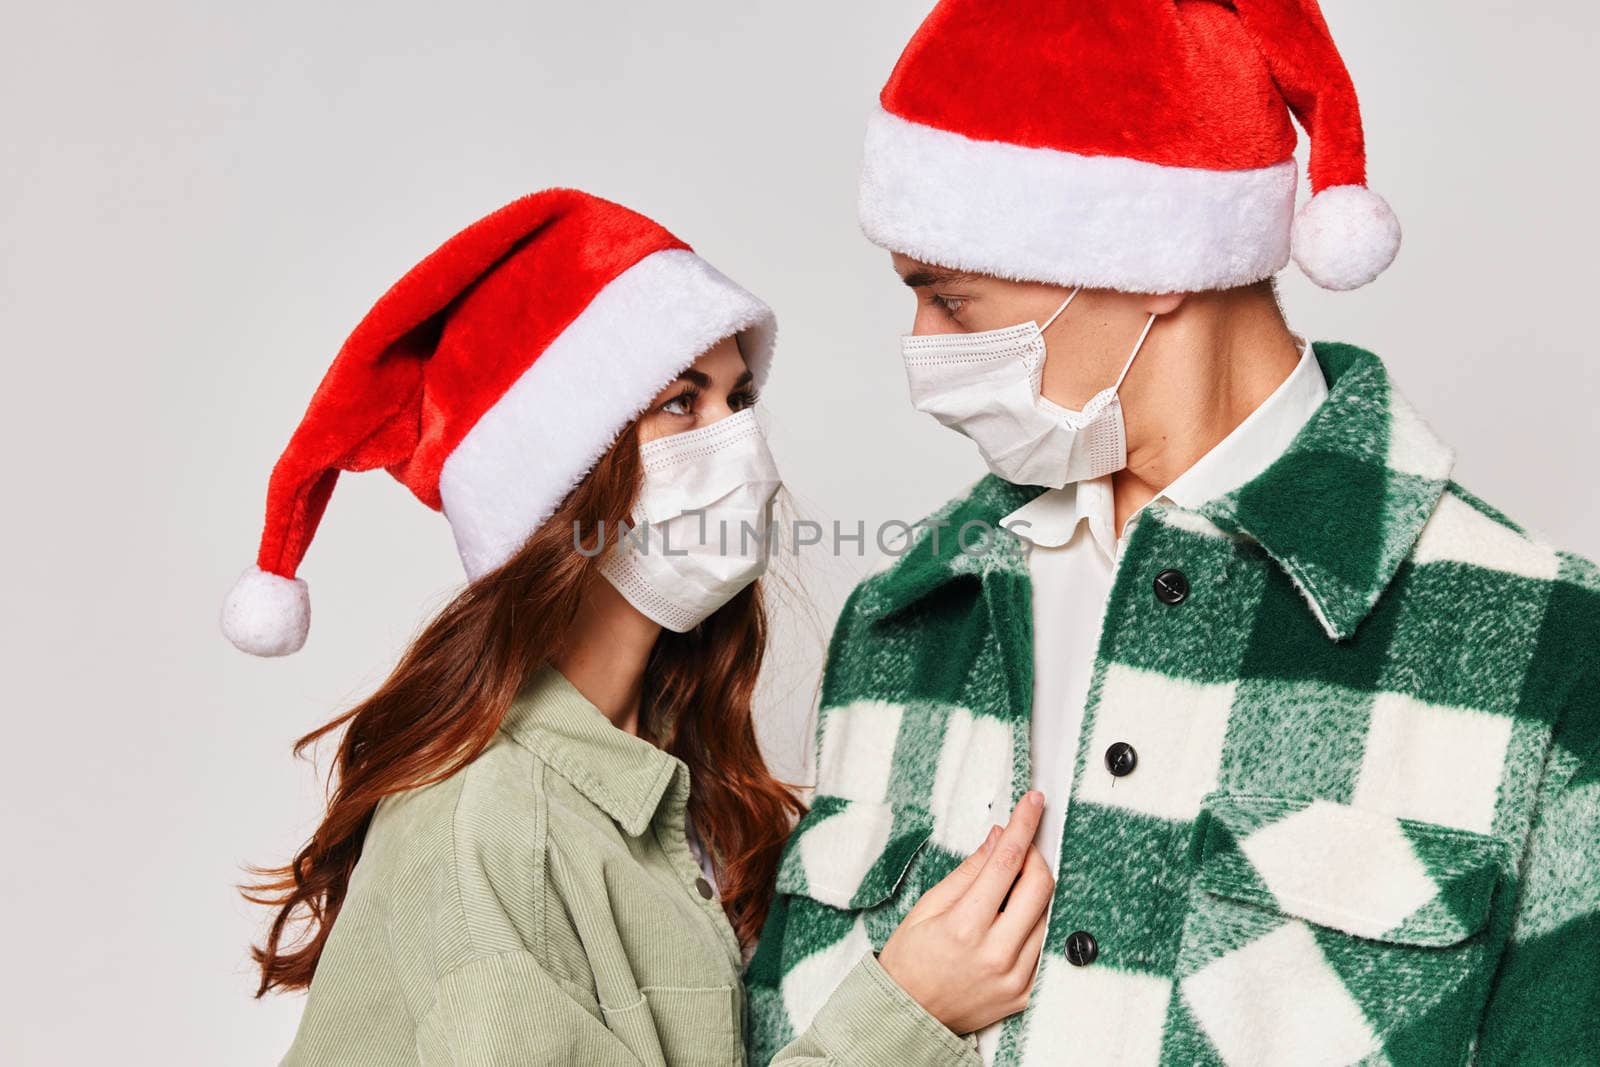 Cute young couple christmas hats medical masks close-up hug. High quality photo